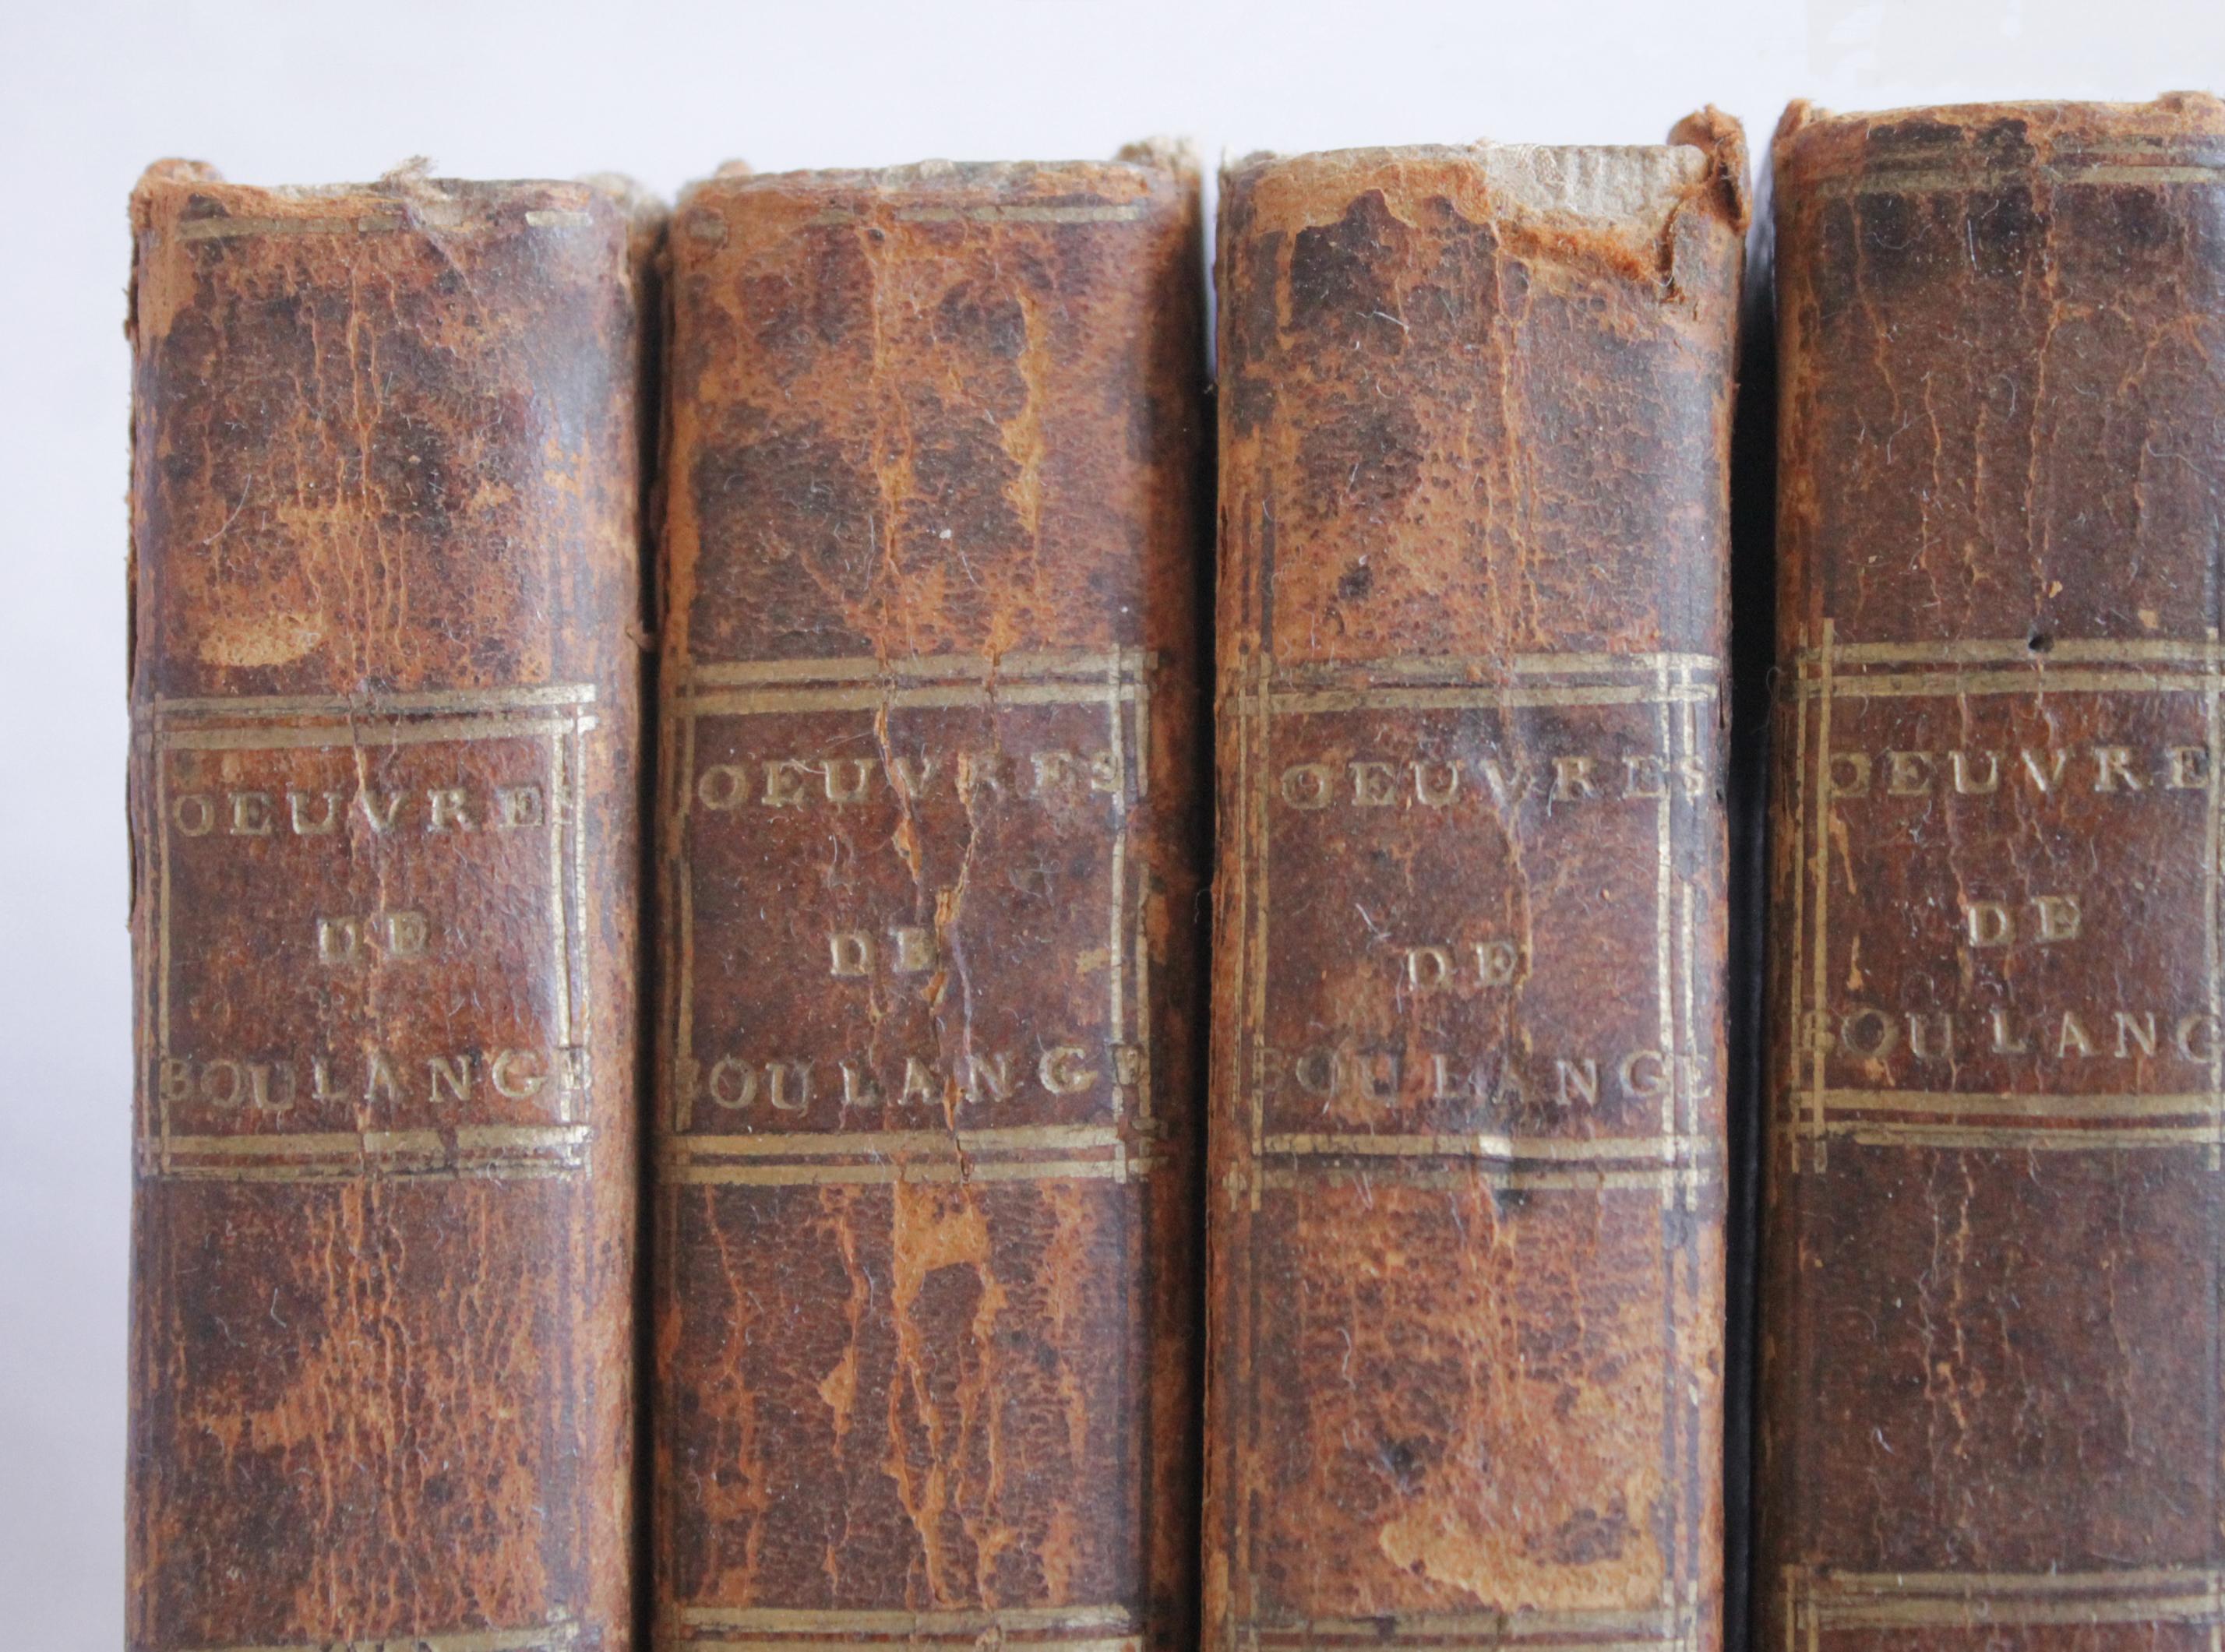 Antique 19th century leather bound books
Set includes: 1,2,3,5,6,7,9
Measures: 1